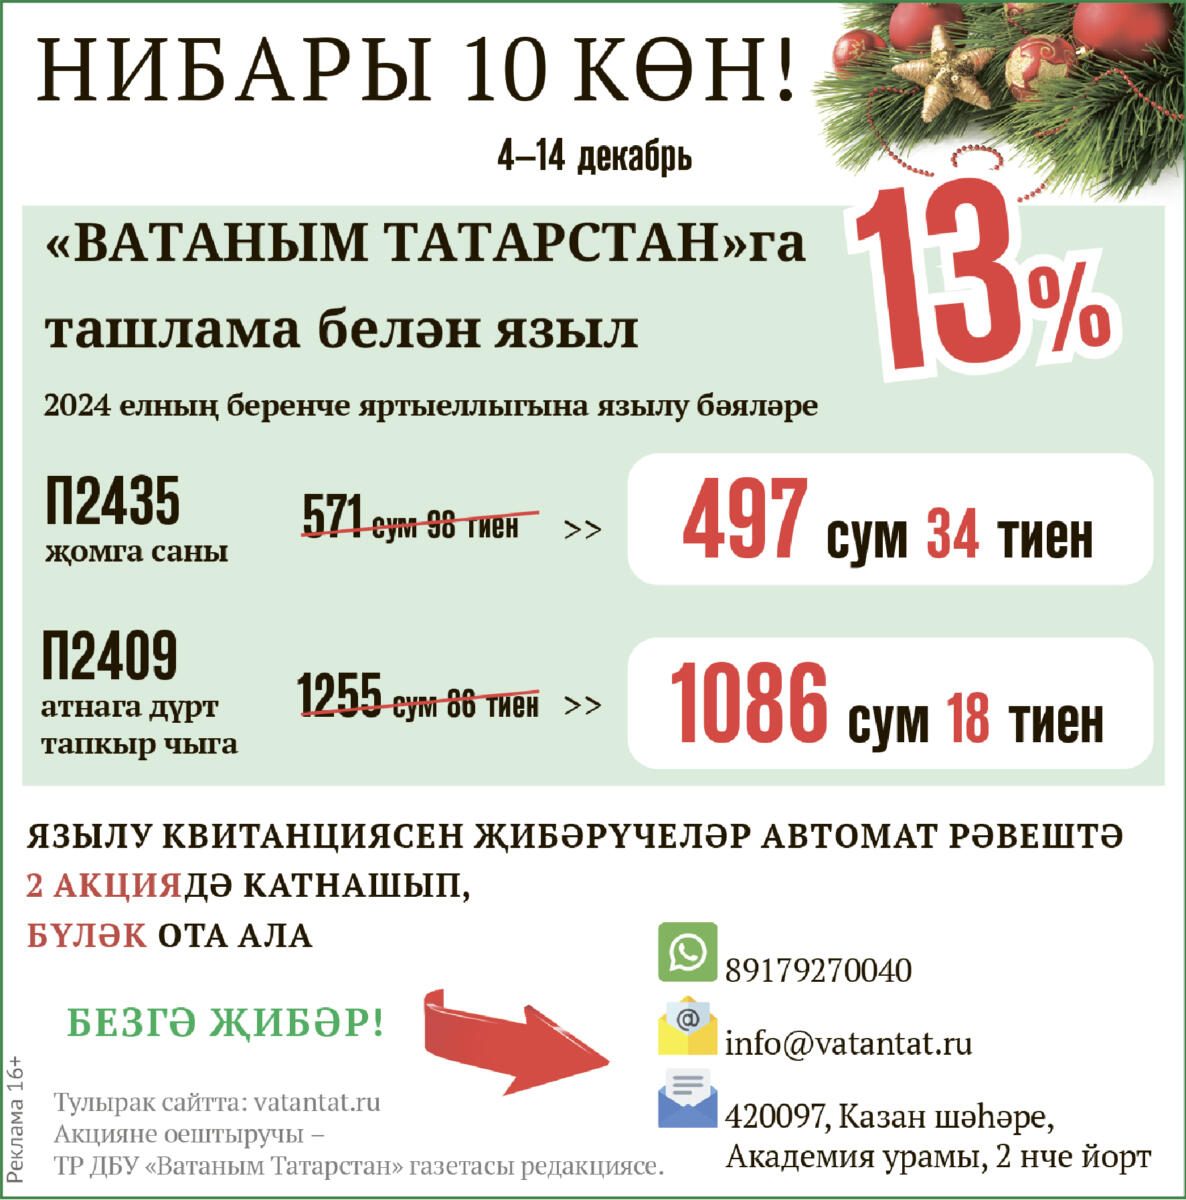 “Ватаным Татарстан”га 13% ташлама белән языл һәм бүләк от!